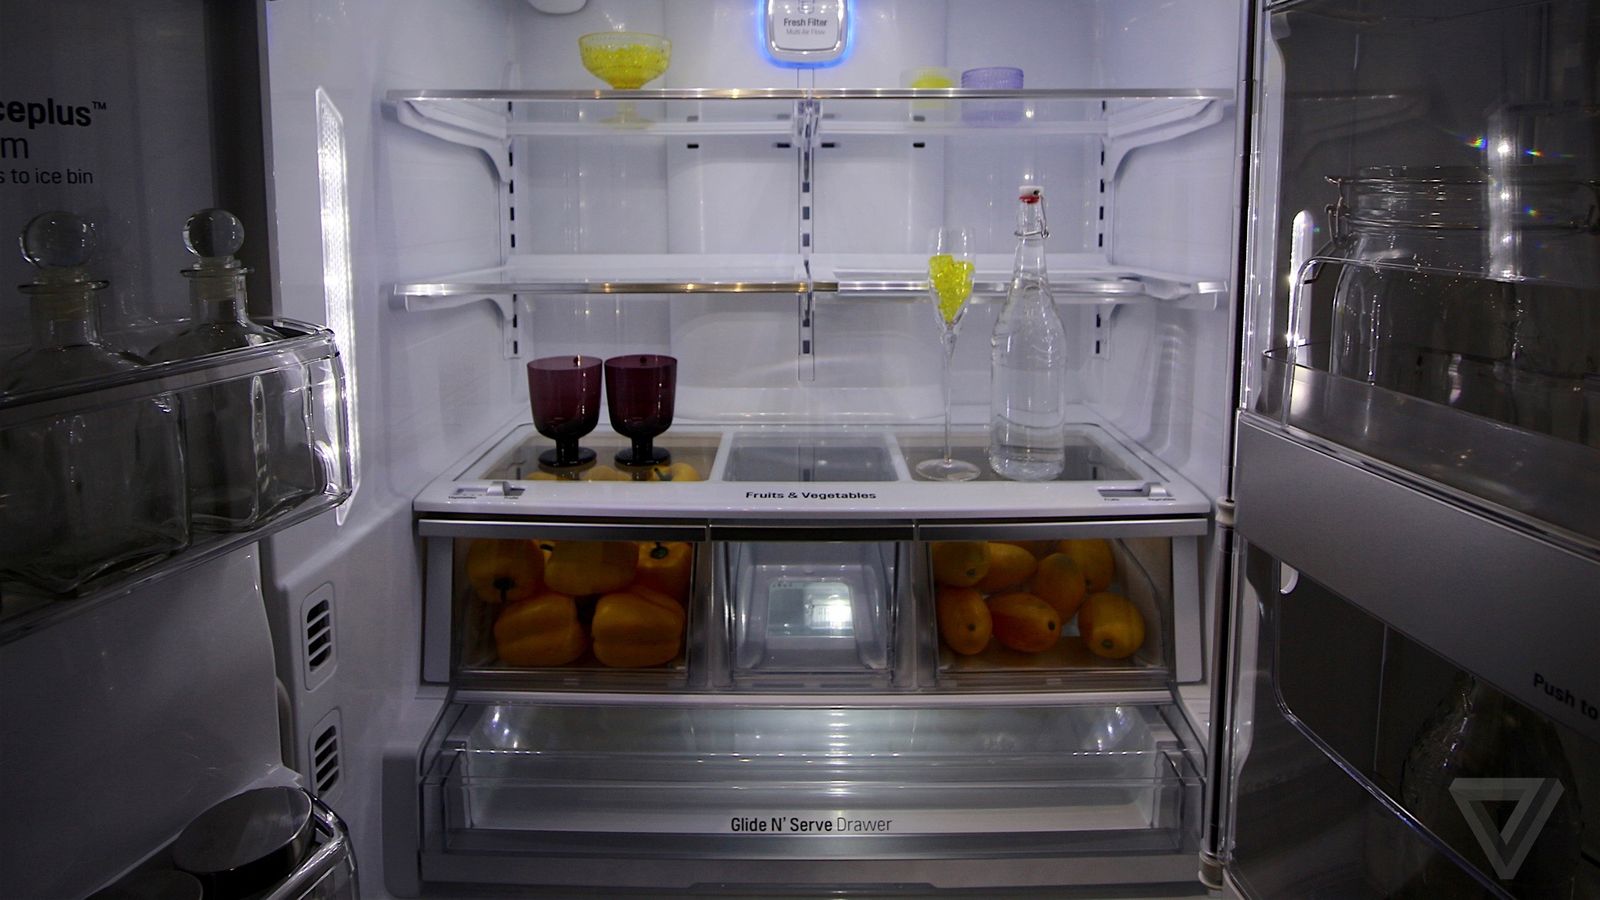 Smart refrigerators